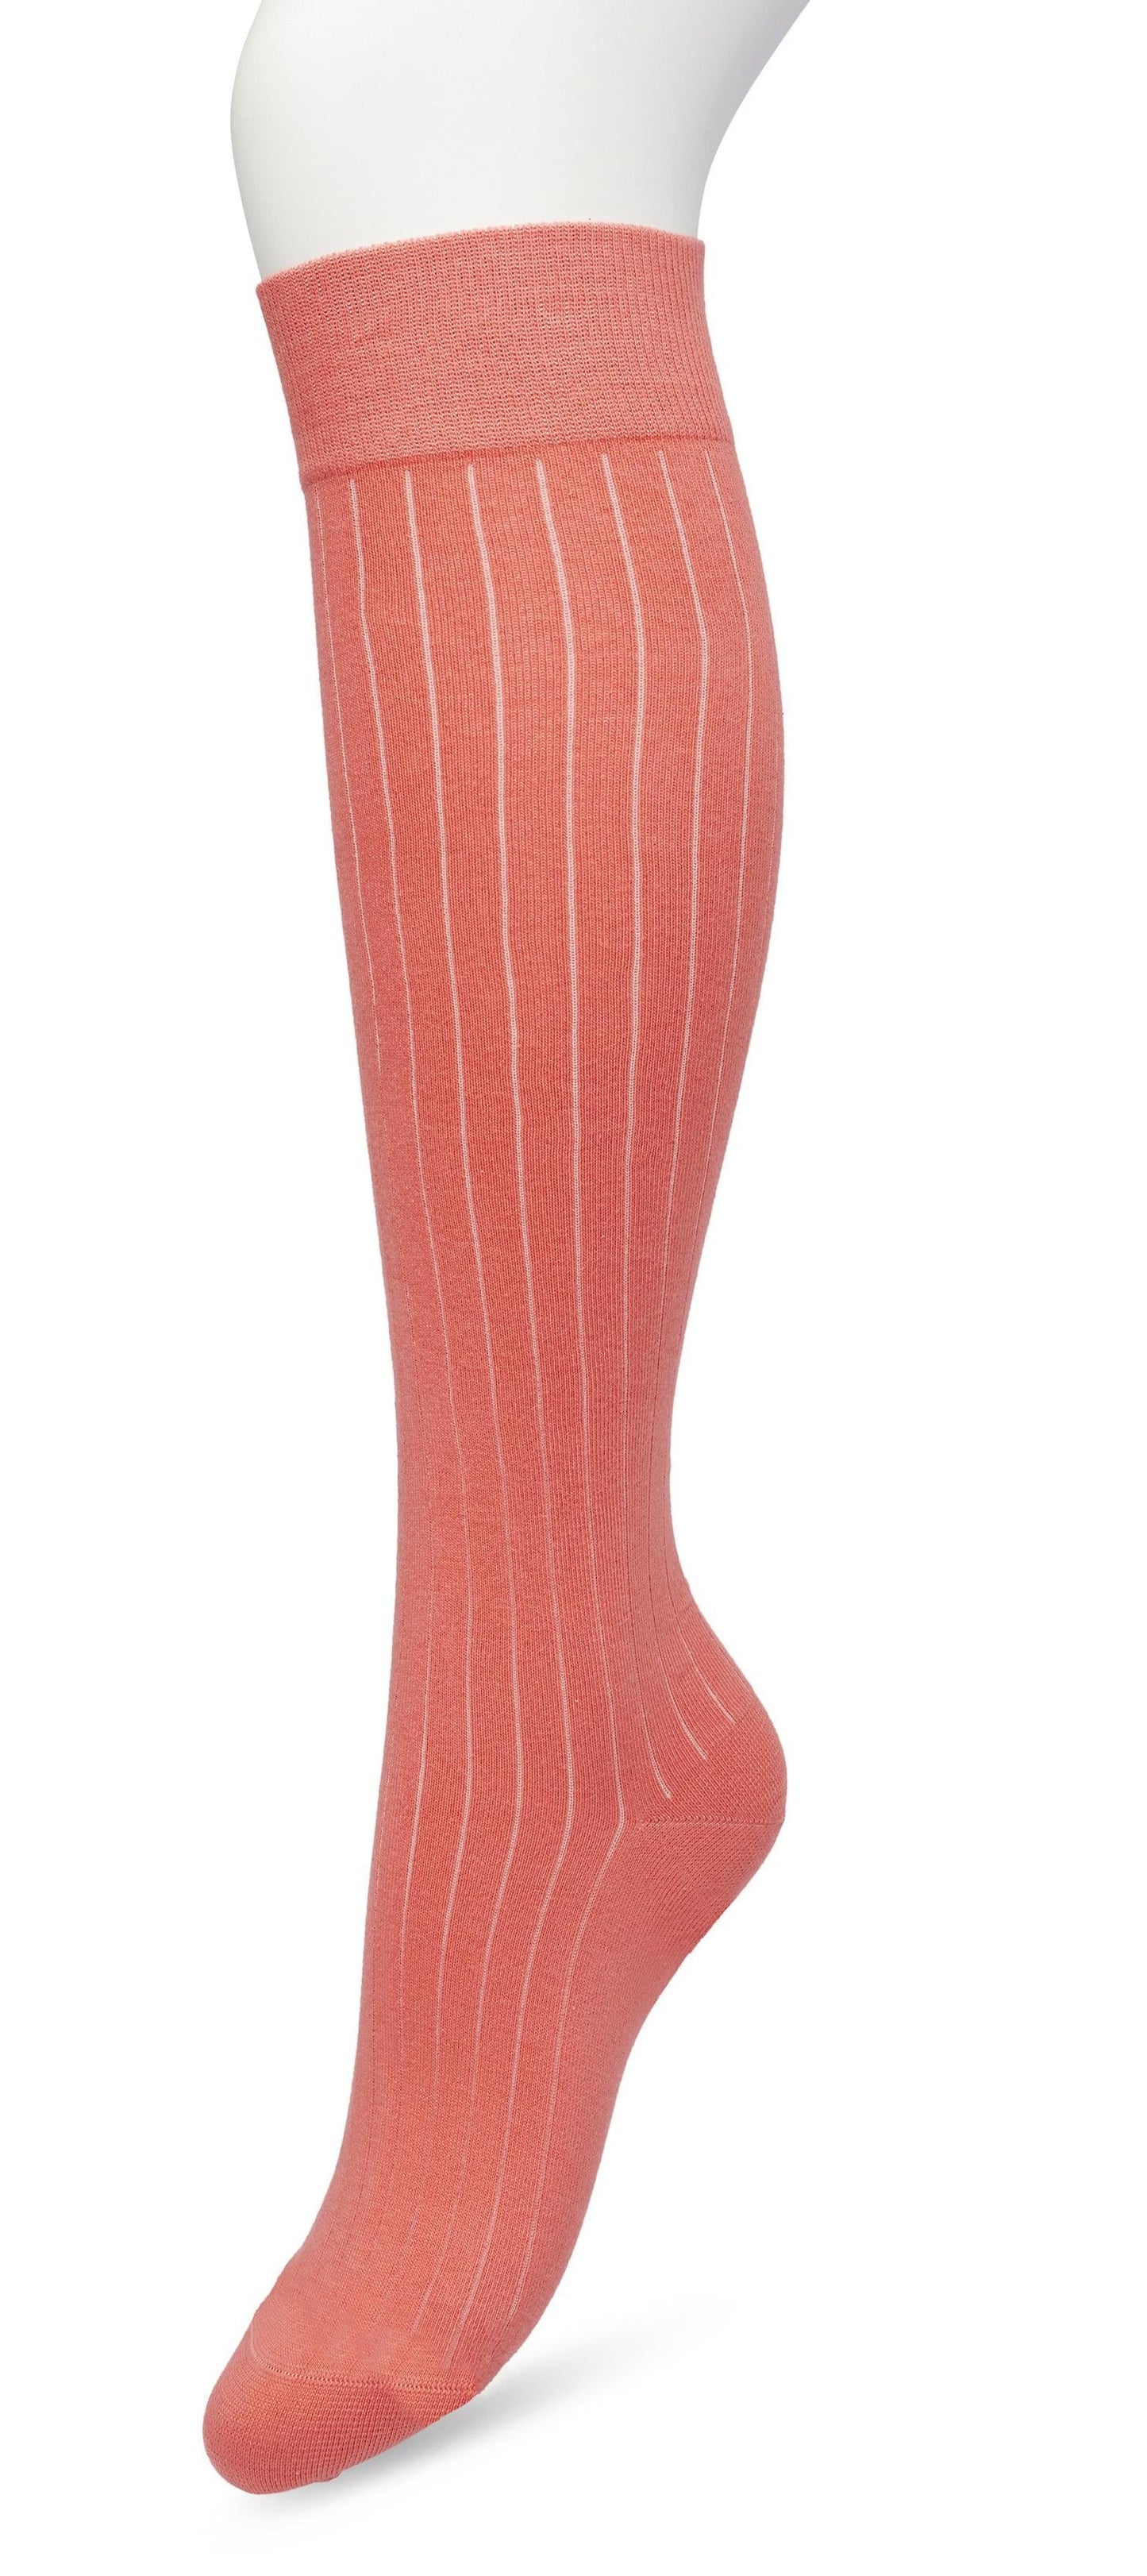 Bonnie Doon Rib Knee High Sock - Coral pink light knitted rib knee-high sock with shaped heel, flat toe seam and deep elasticated cuff.